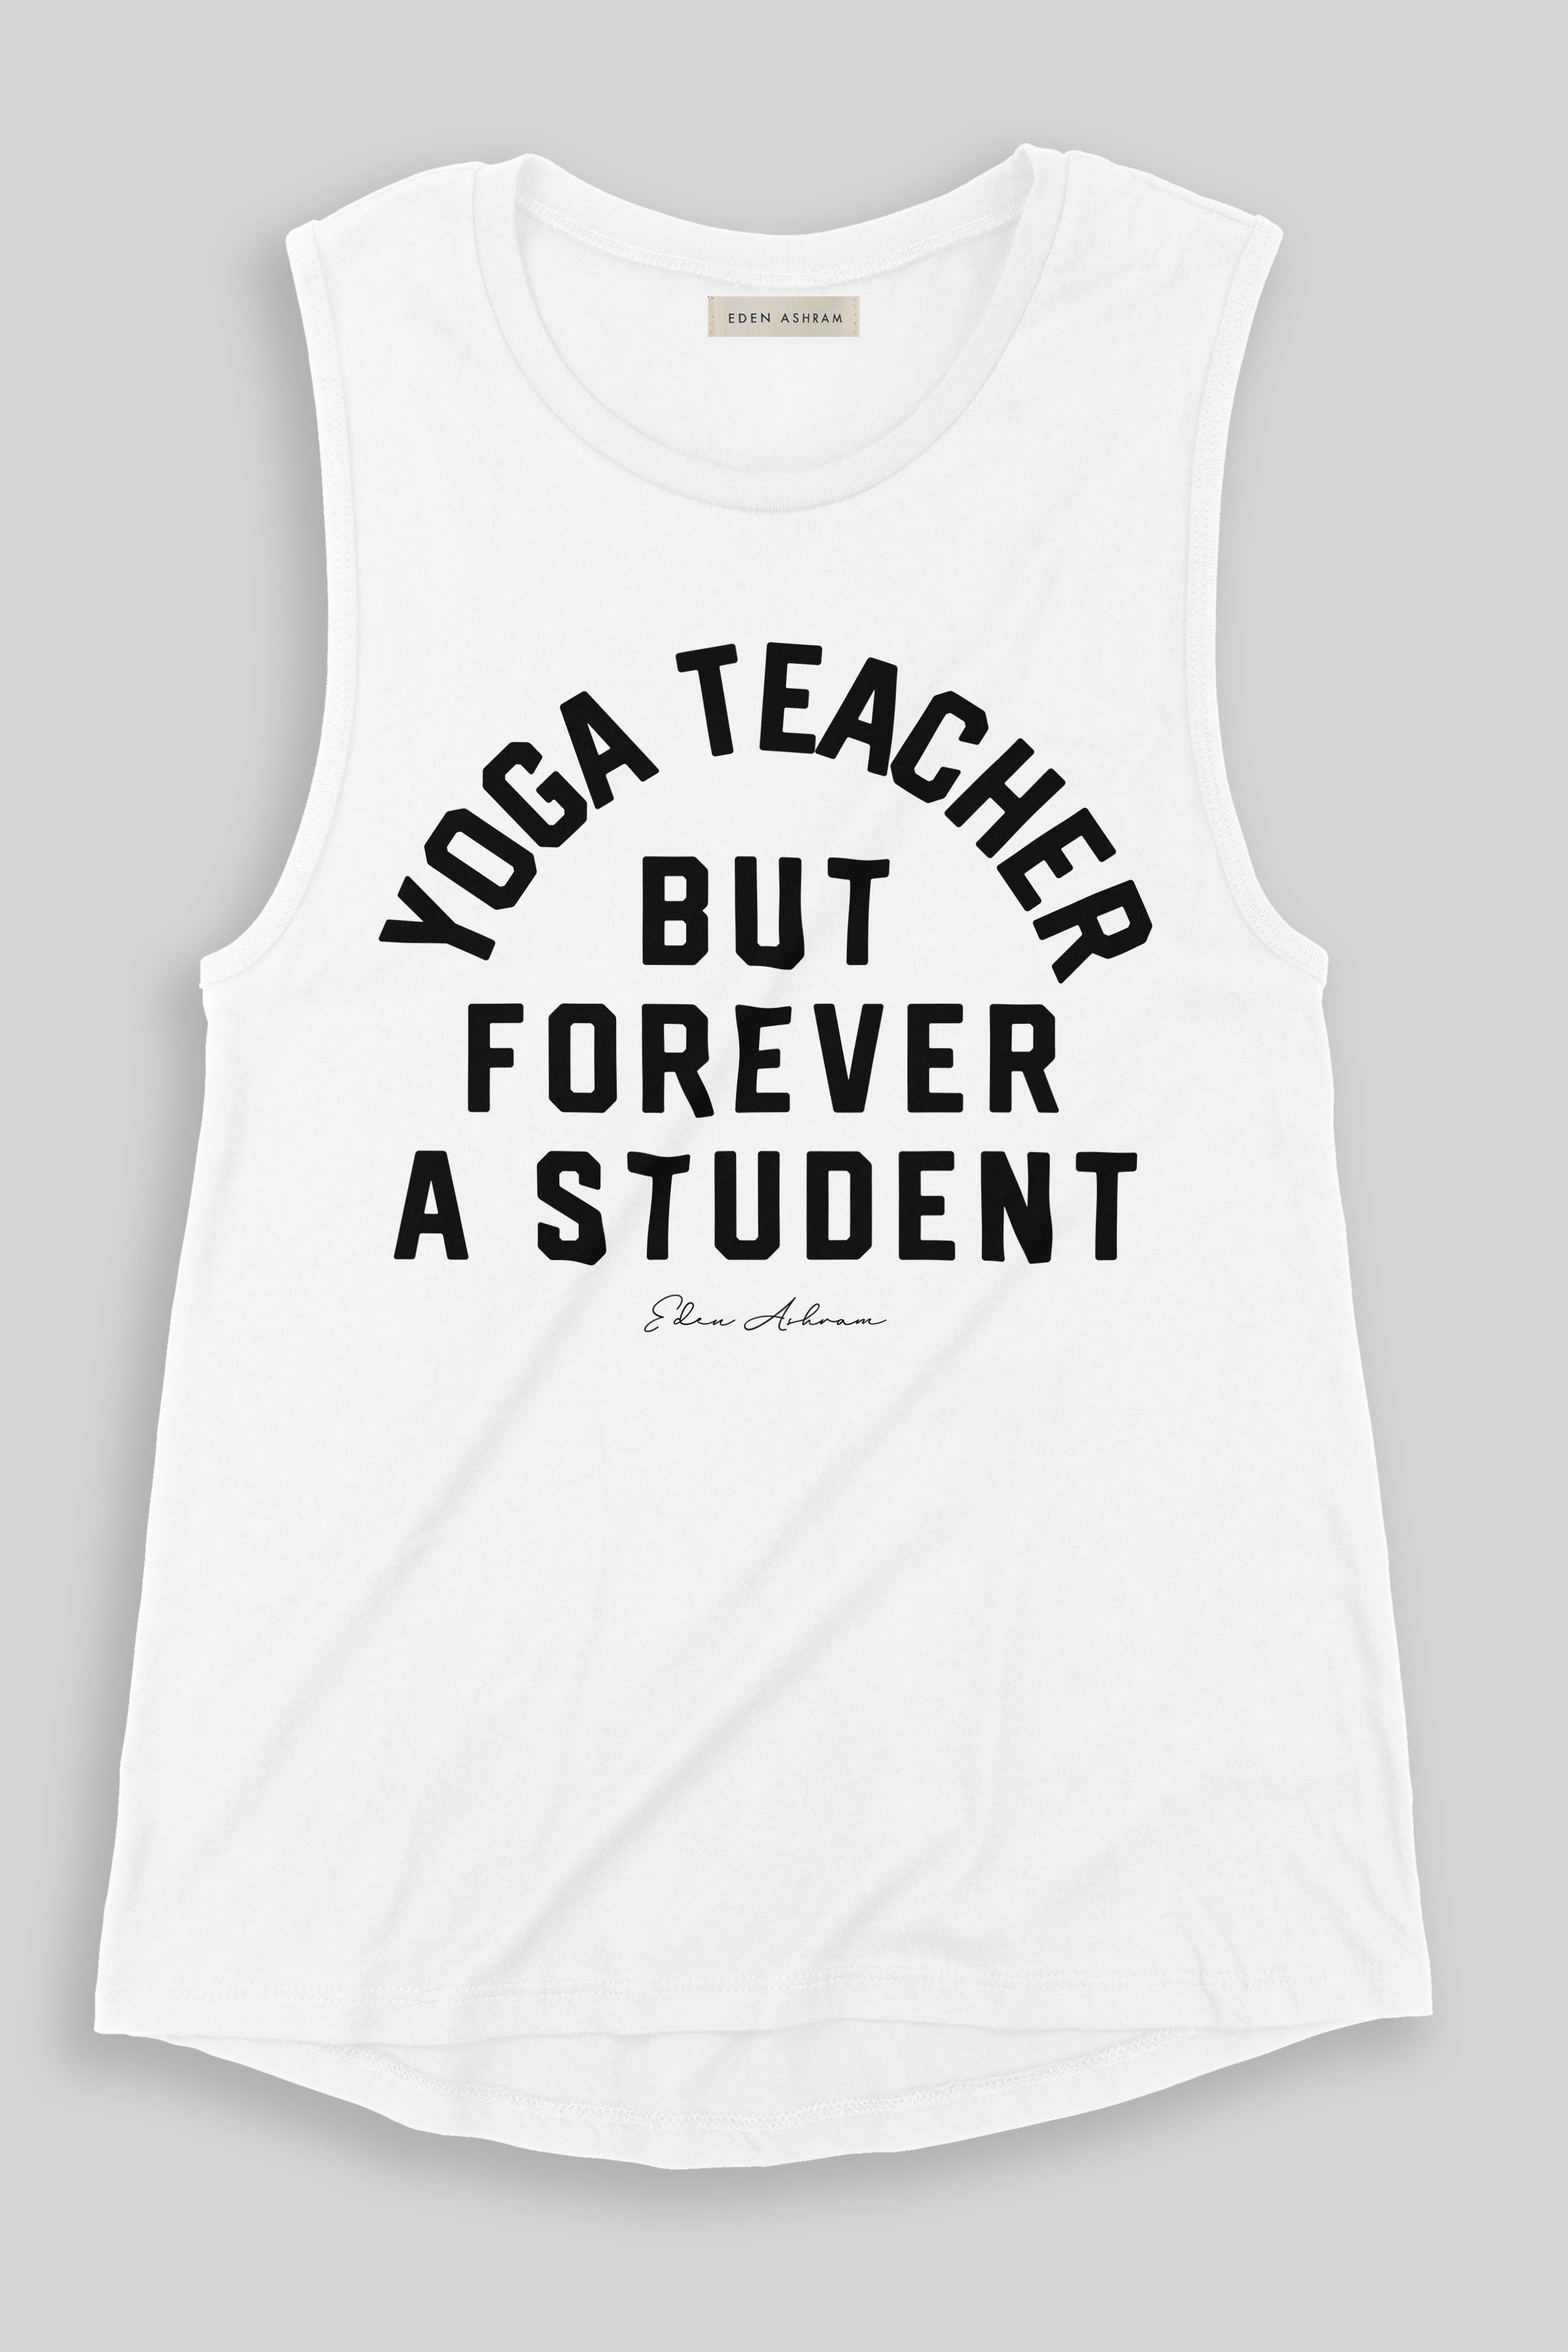 EDEN ASHRAM Yoga Teacher But Forever A Student Premium Jersey Muscle Tank White